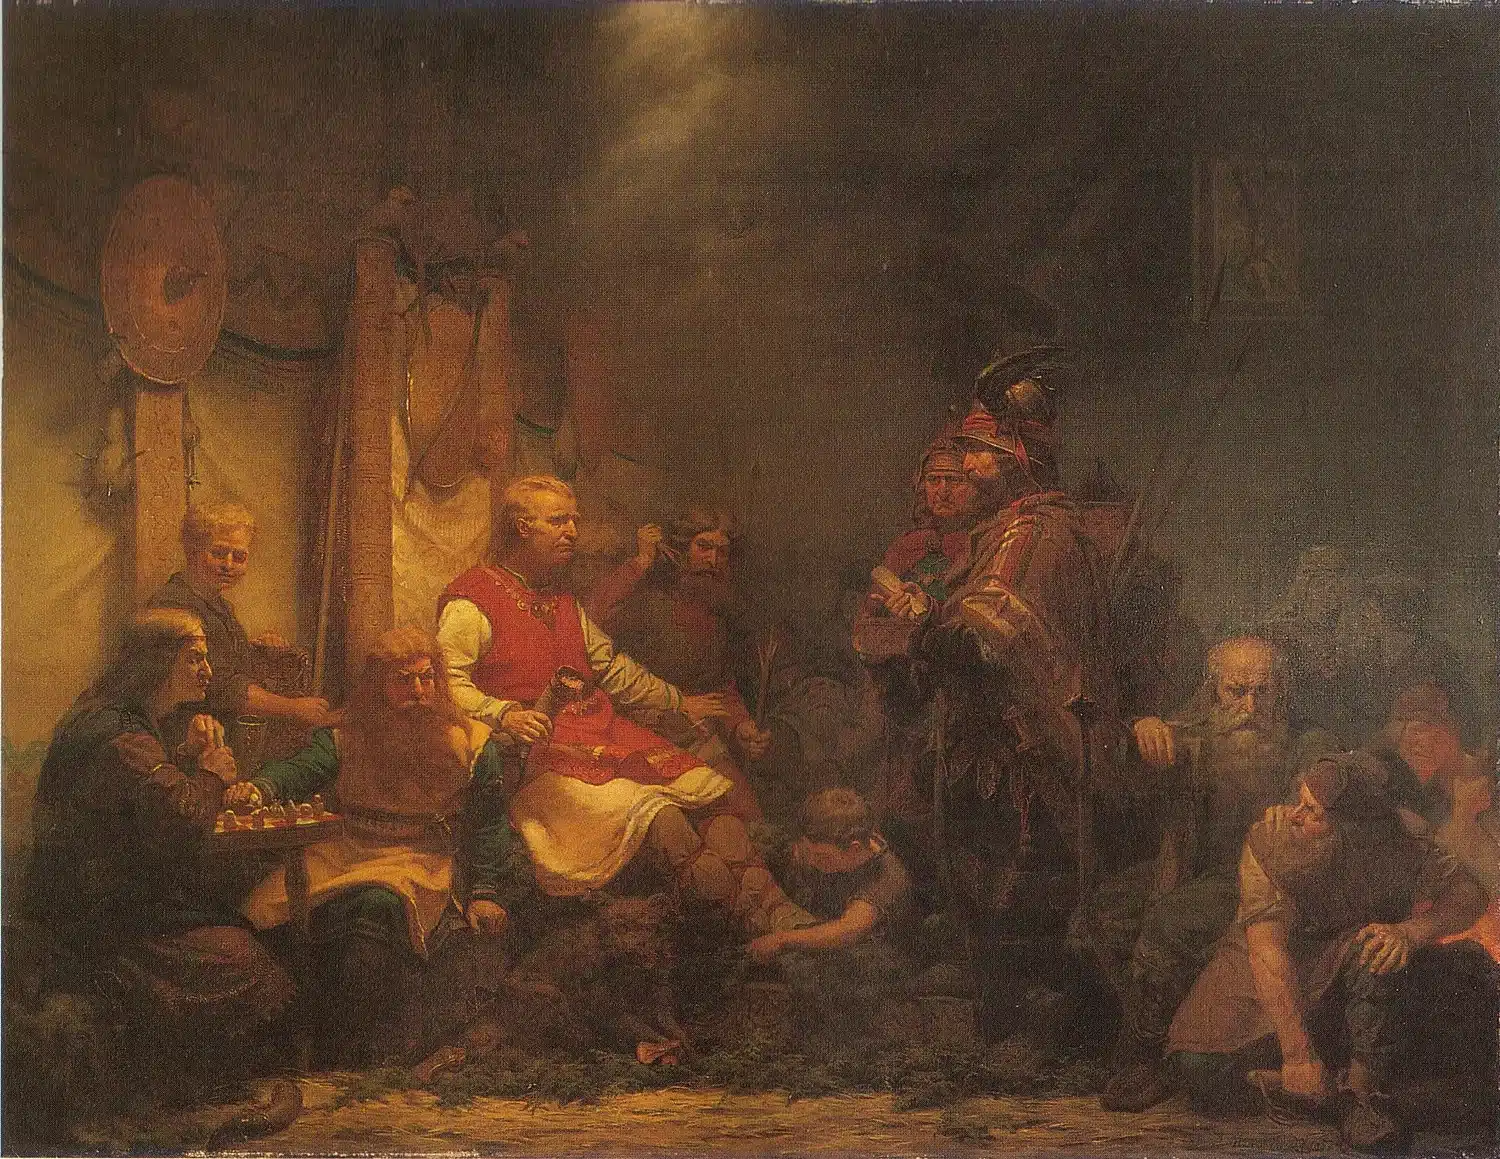 Ivar the Boneless, Ubbe and Hivtserk Ragnar Lothbrok's Sons -  Mythologian.Net